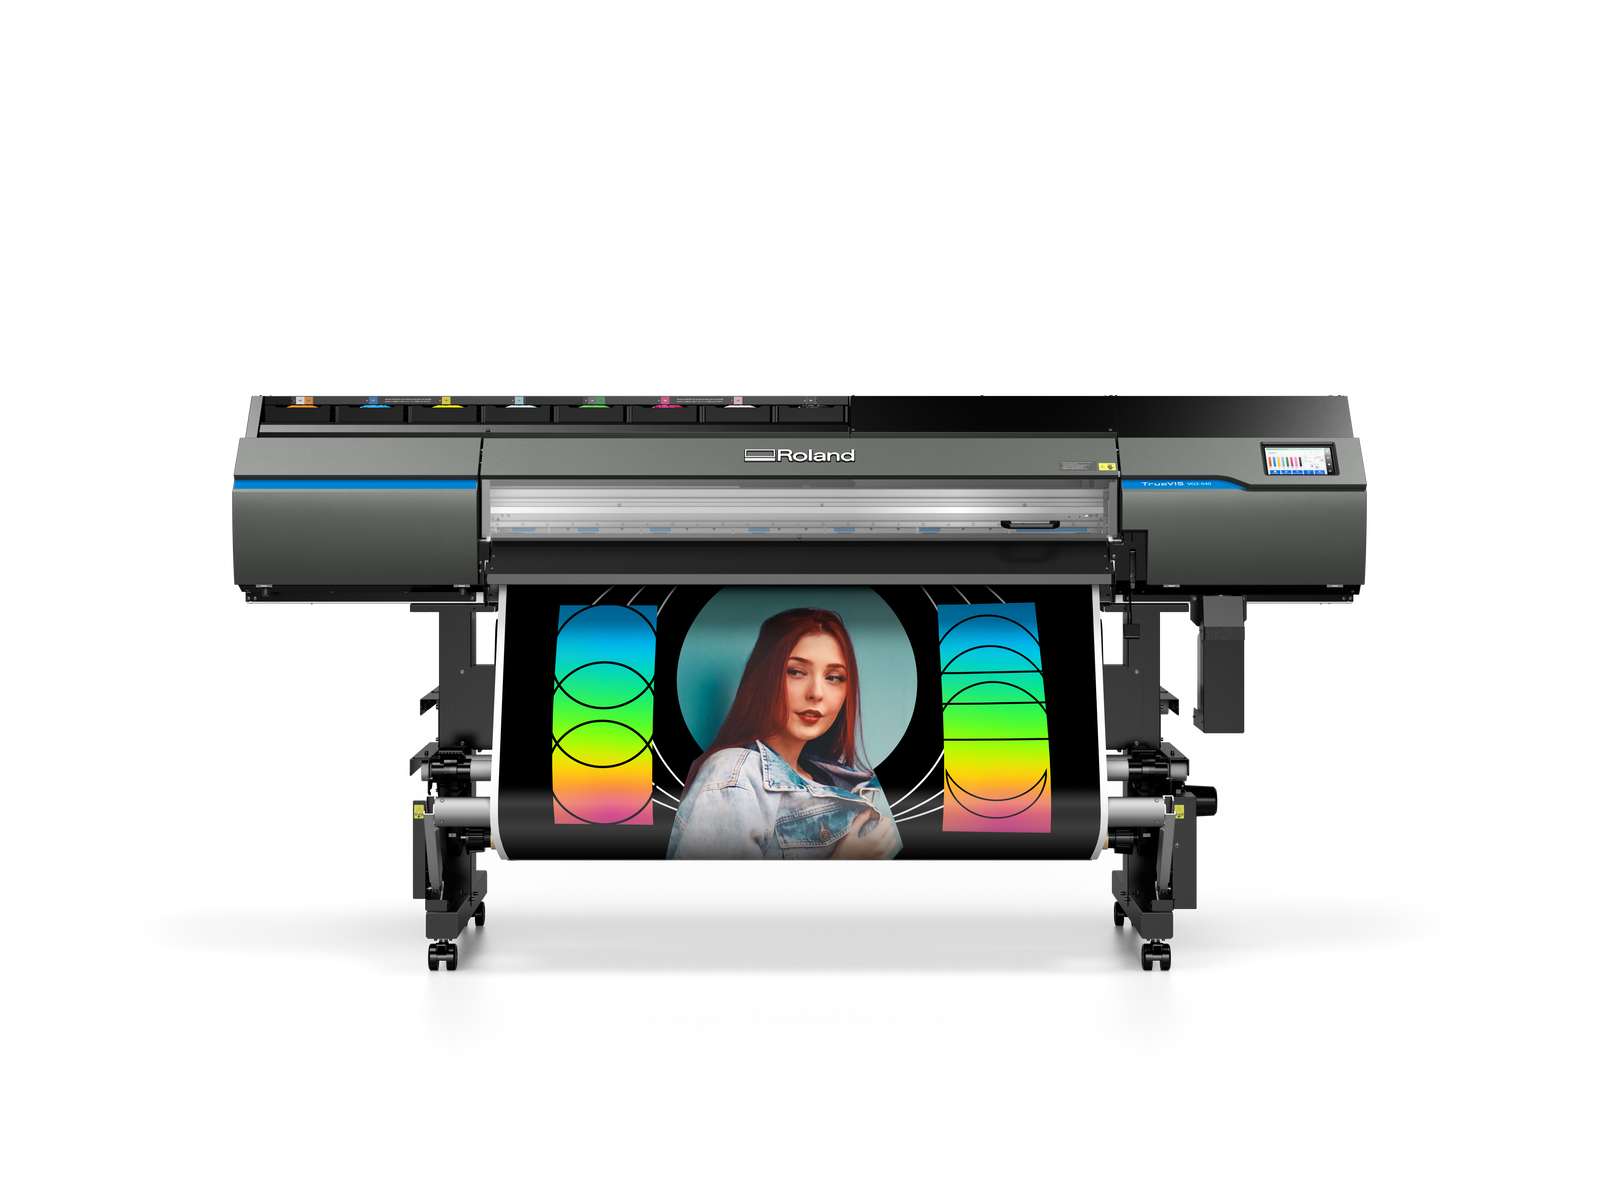 VG3 roland printer cutter truevis